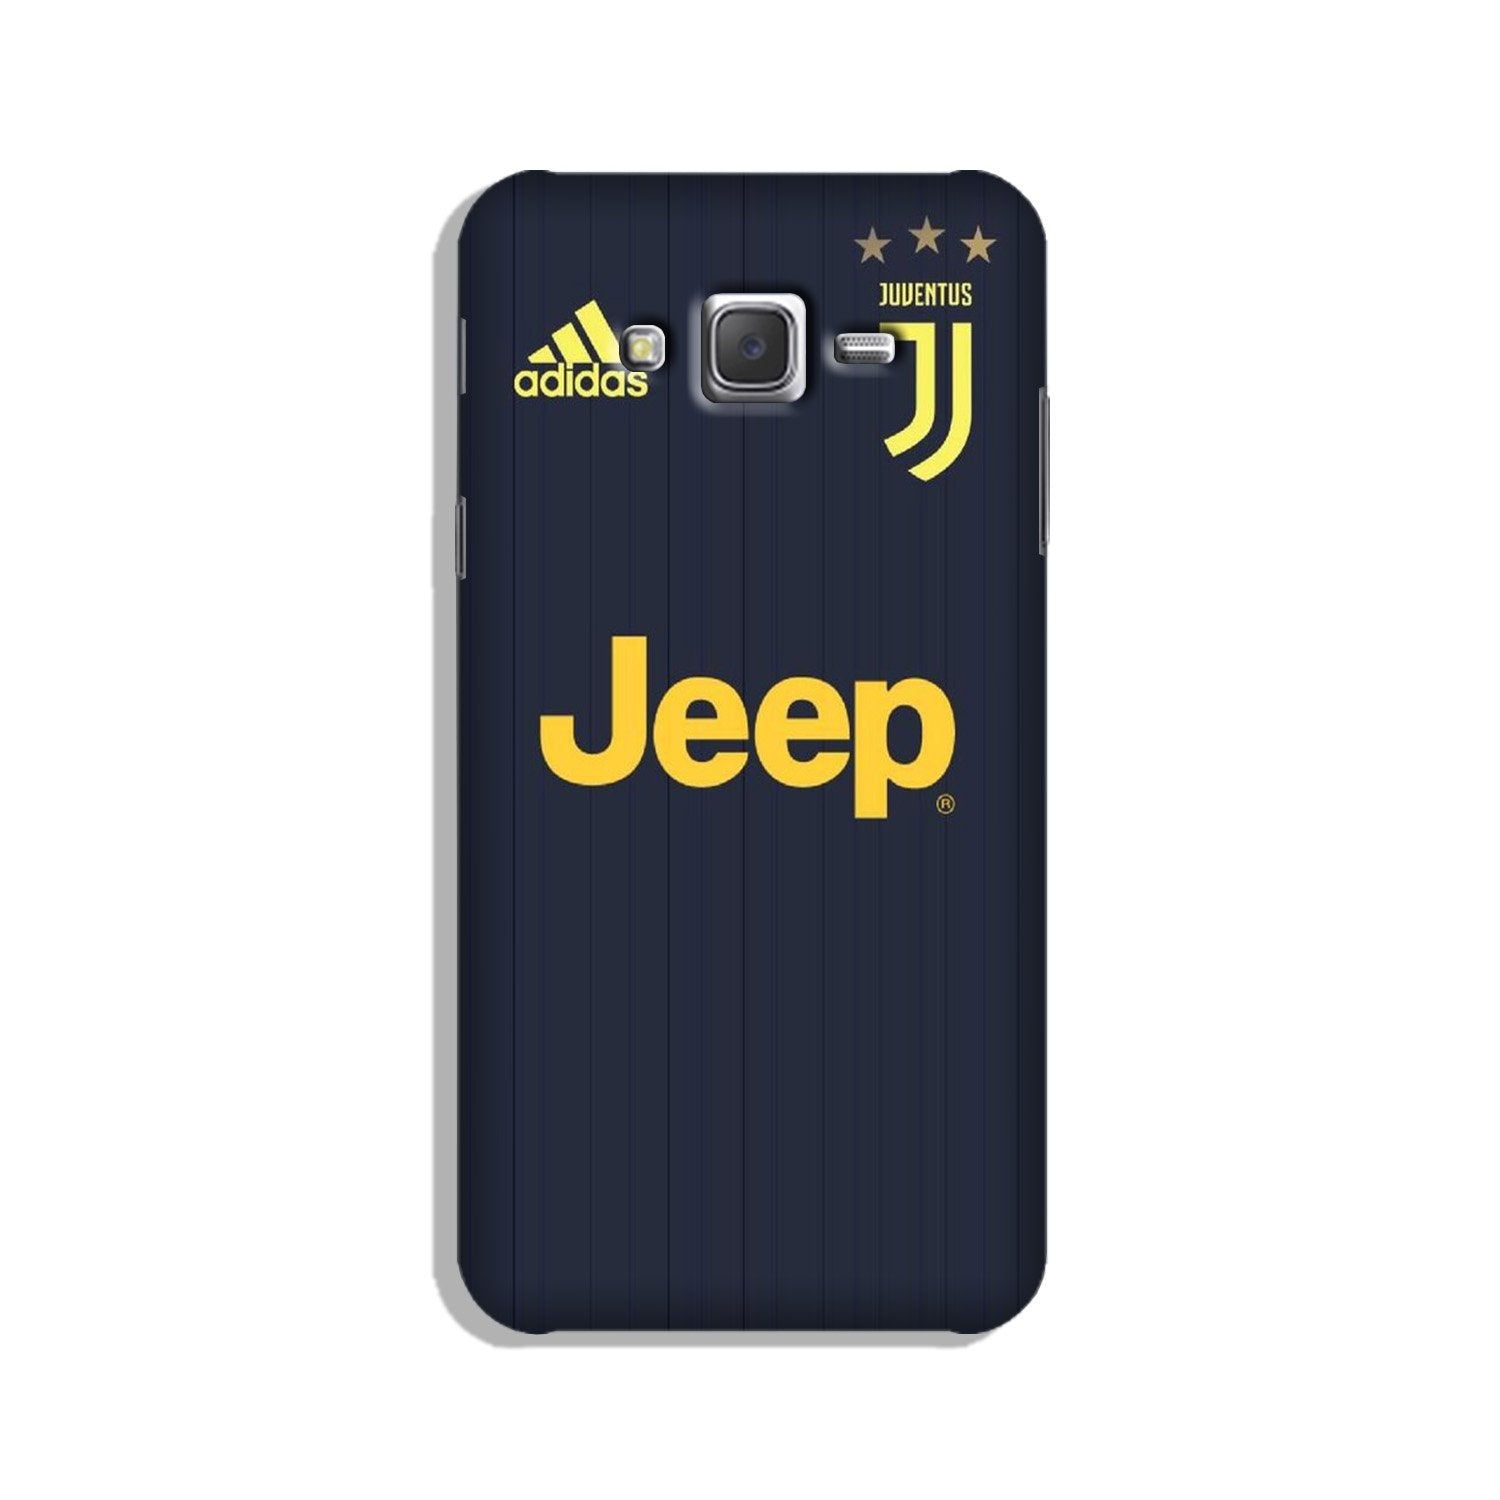 Jeep Juventus Case for Galaxy J7 (2015)(Design - 161)